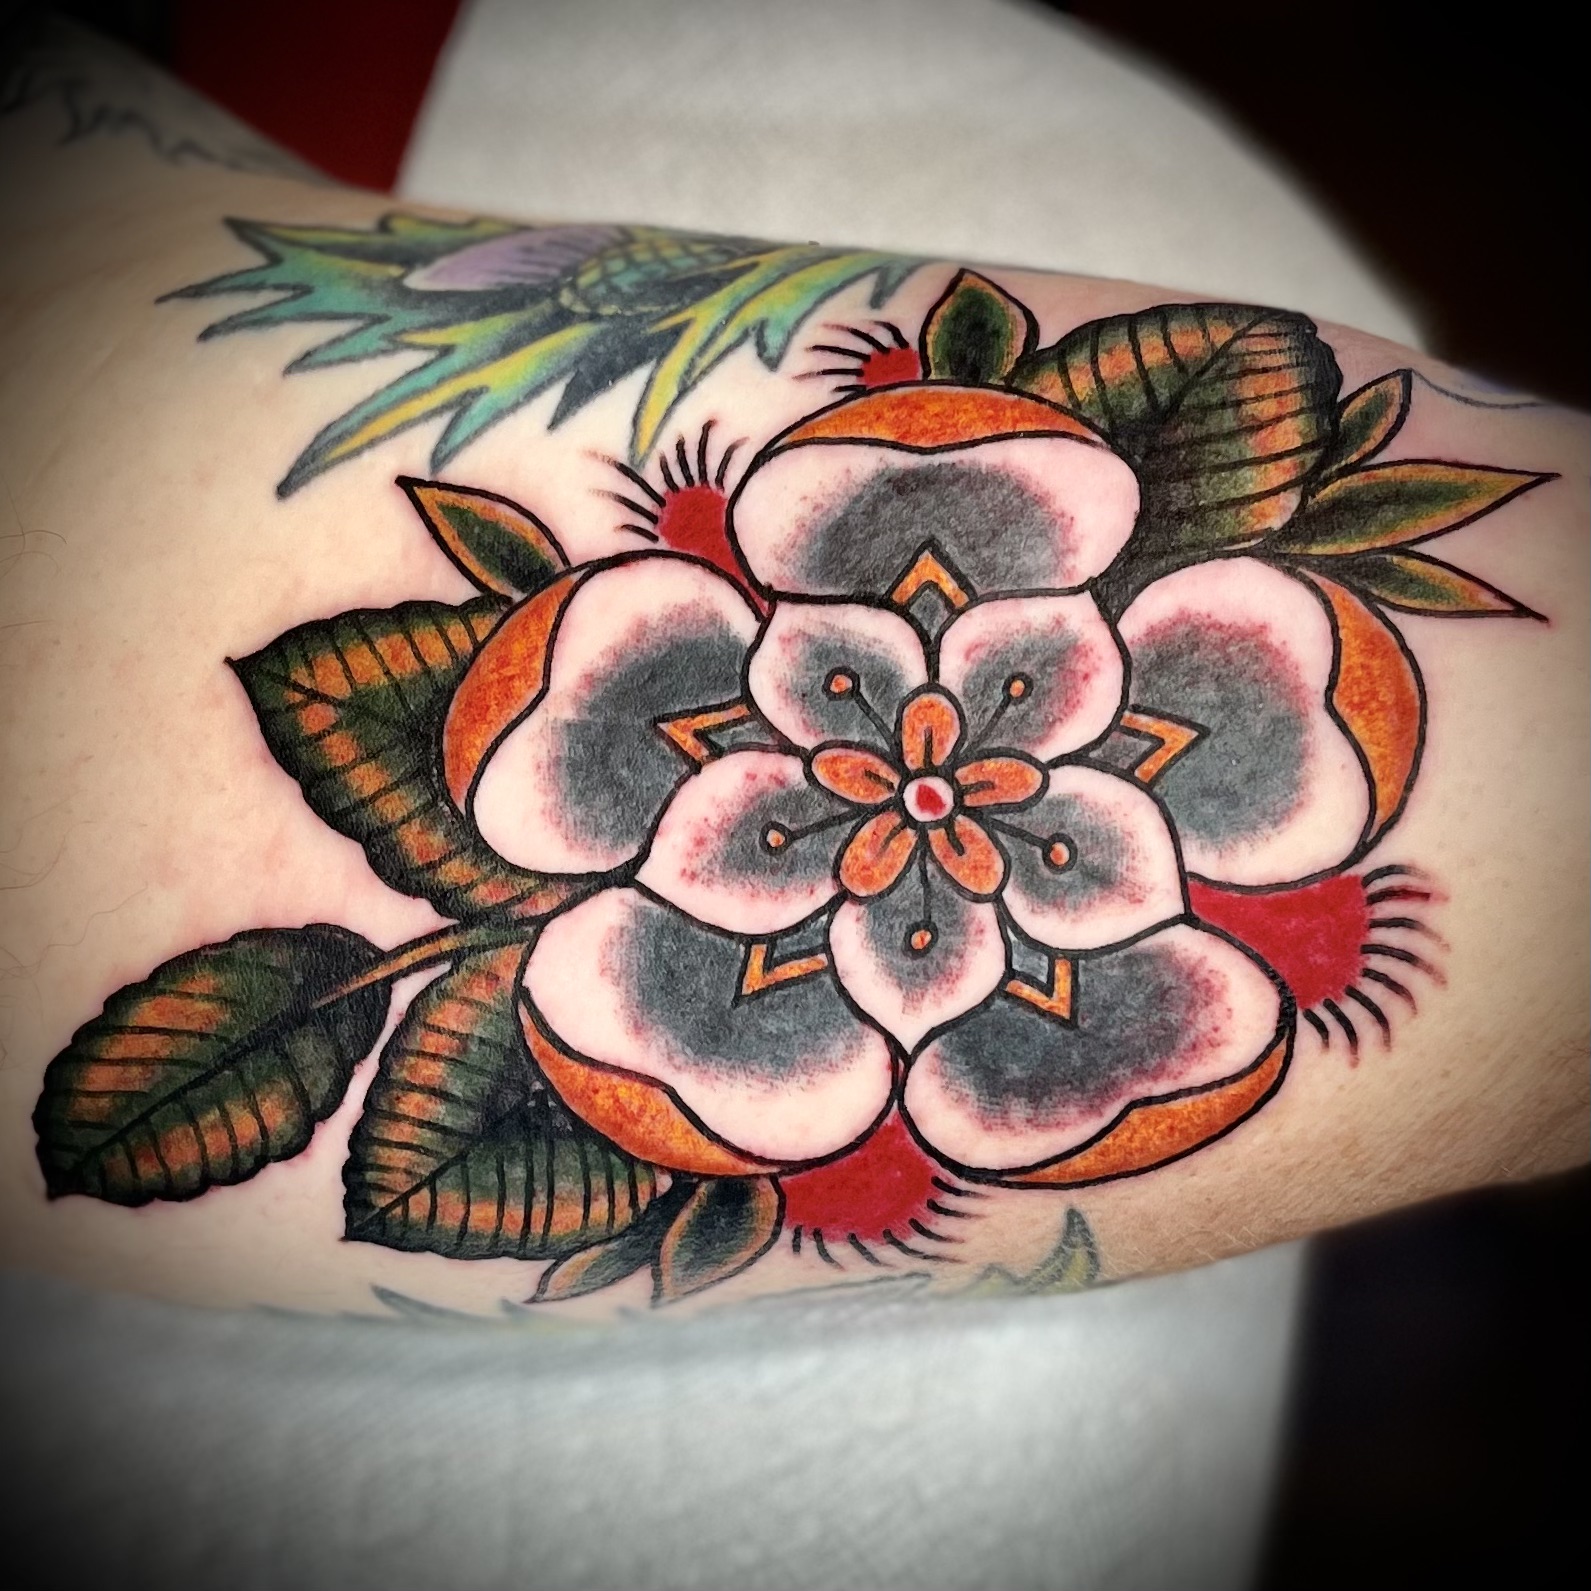 Tattoo of a flower from top dallas tattoo artists